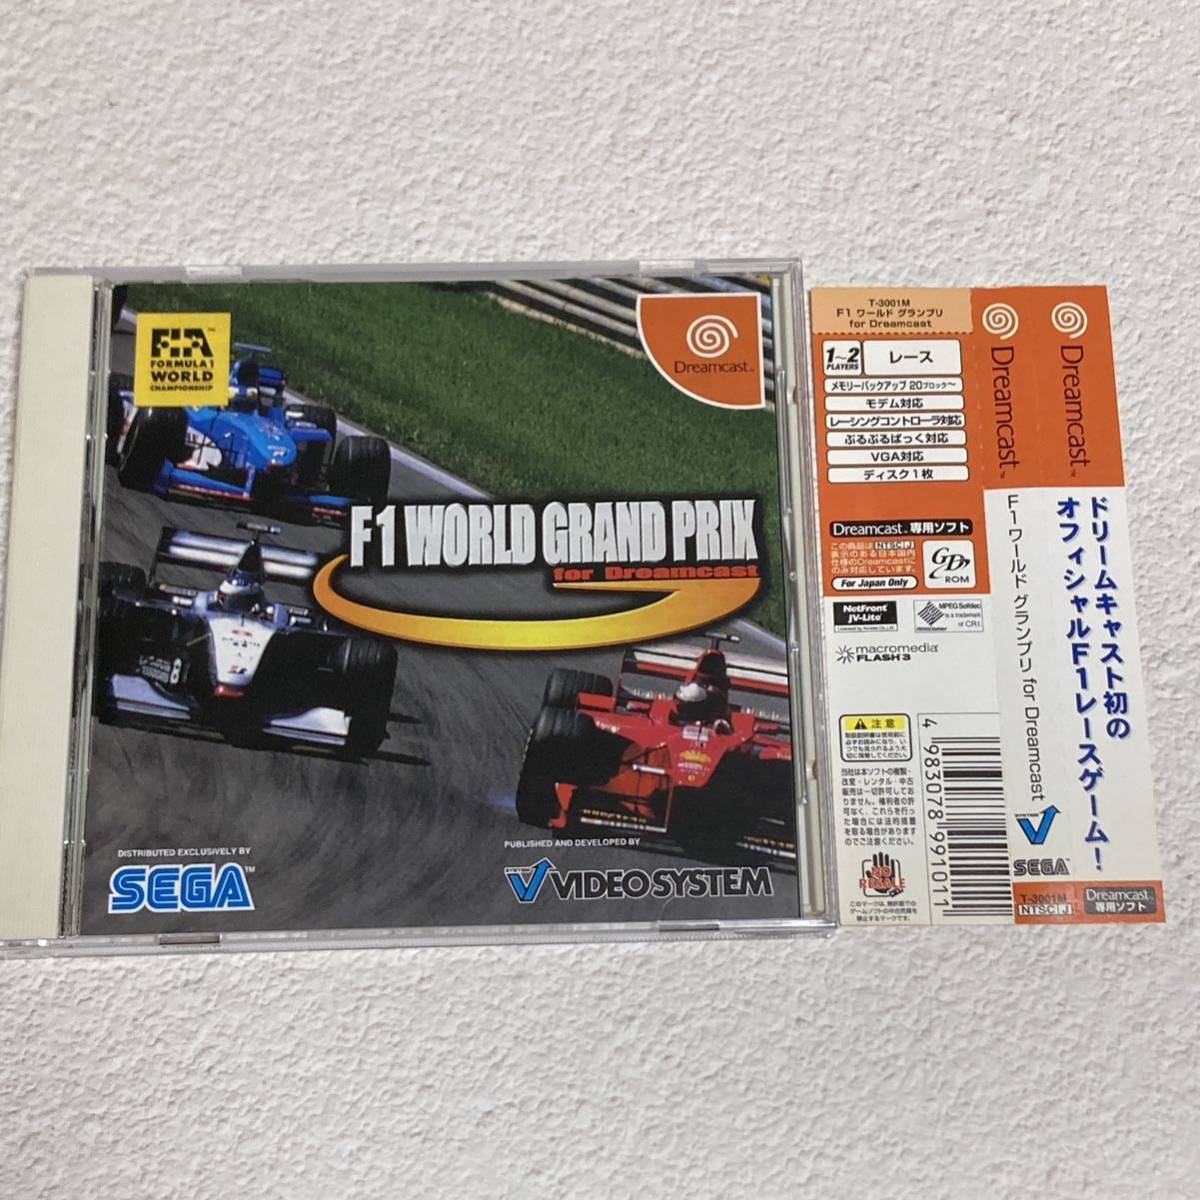  Dreamcast F1 world Grand Prix Dreamcast